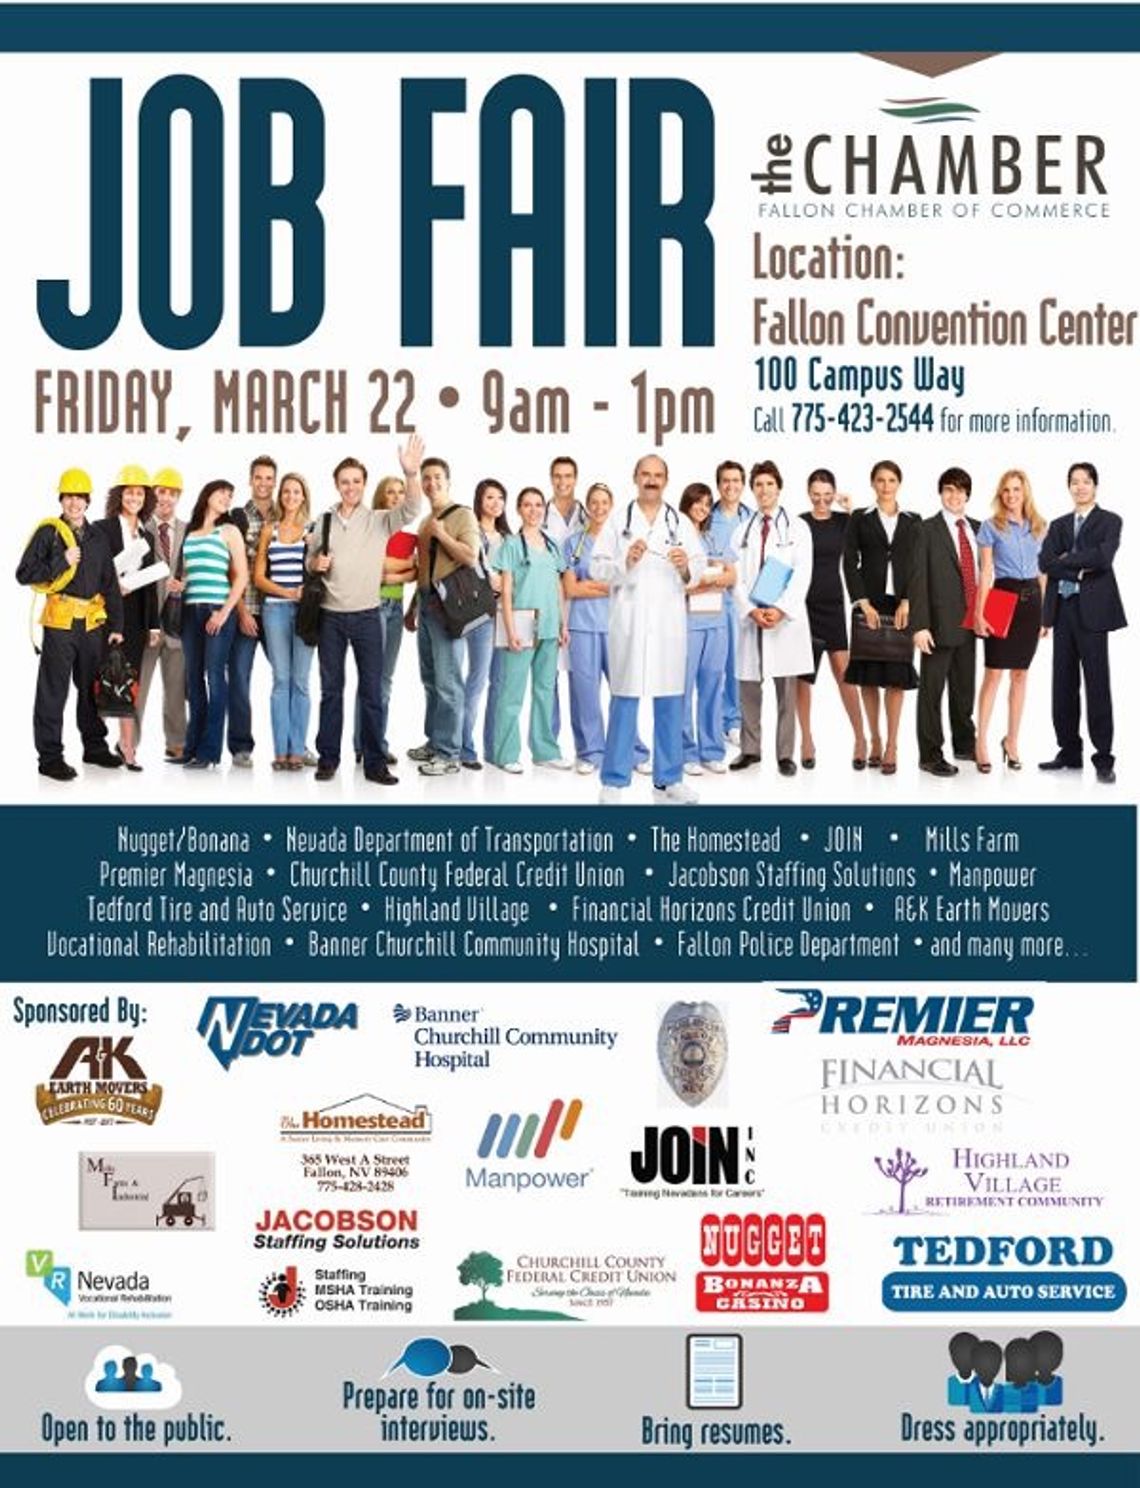 Chamber Job Fair on Friday